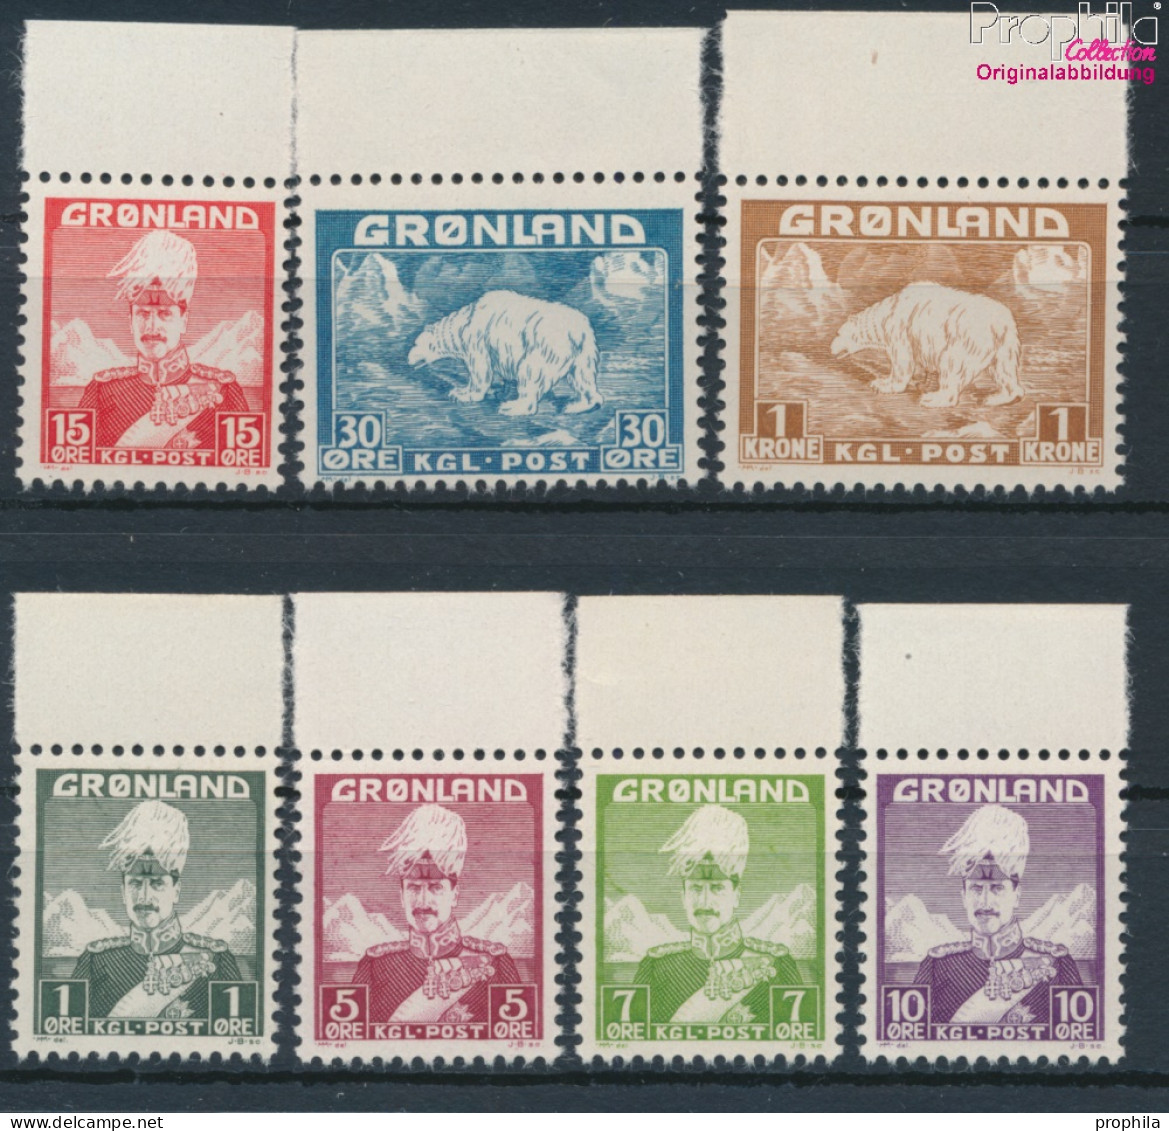 Dänemark - Grönland Postfrisch Christian X. 1938 König Christian X.  (10174214 - Oblitérés